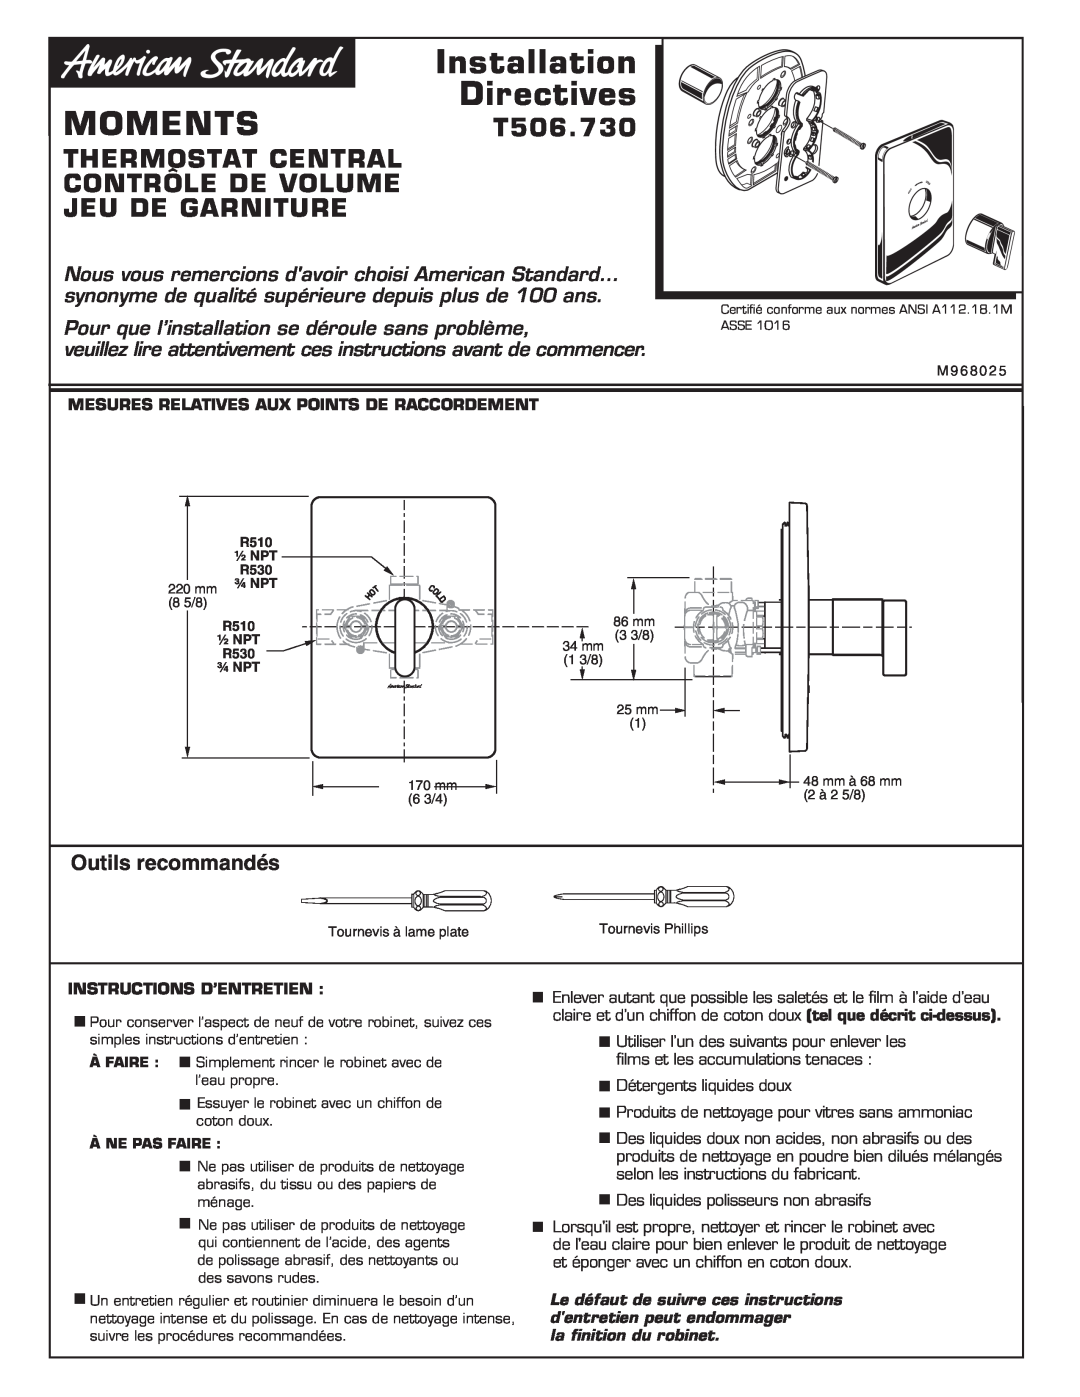 American Standard Installation Directives MOMENTST506.730, Thermostat Central Contrôle De Volume Jeu De Garniture 